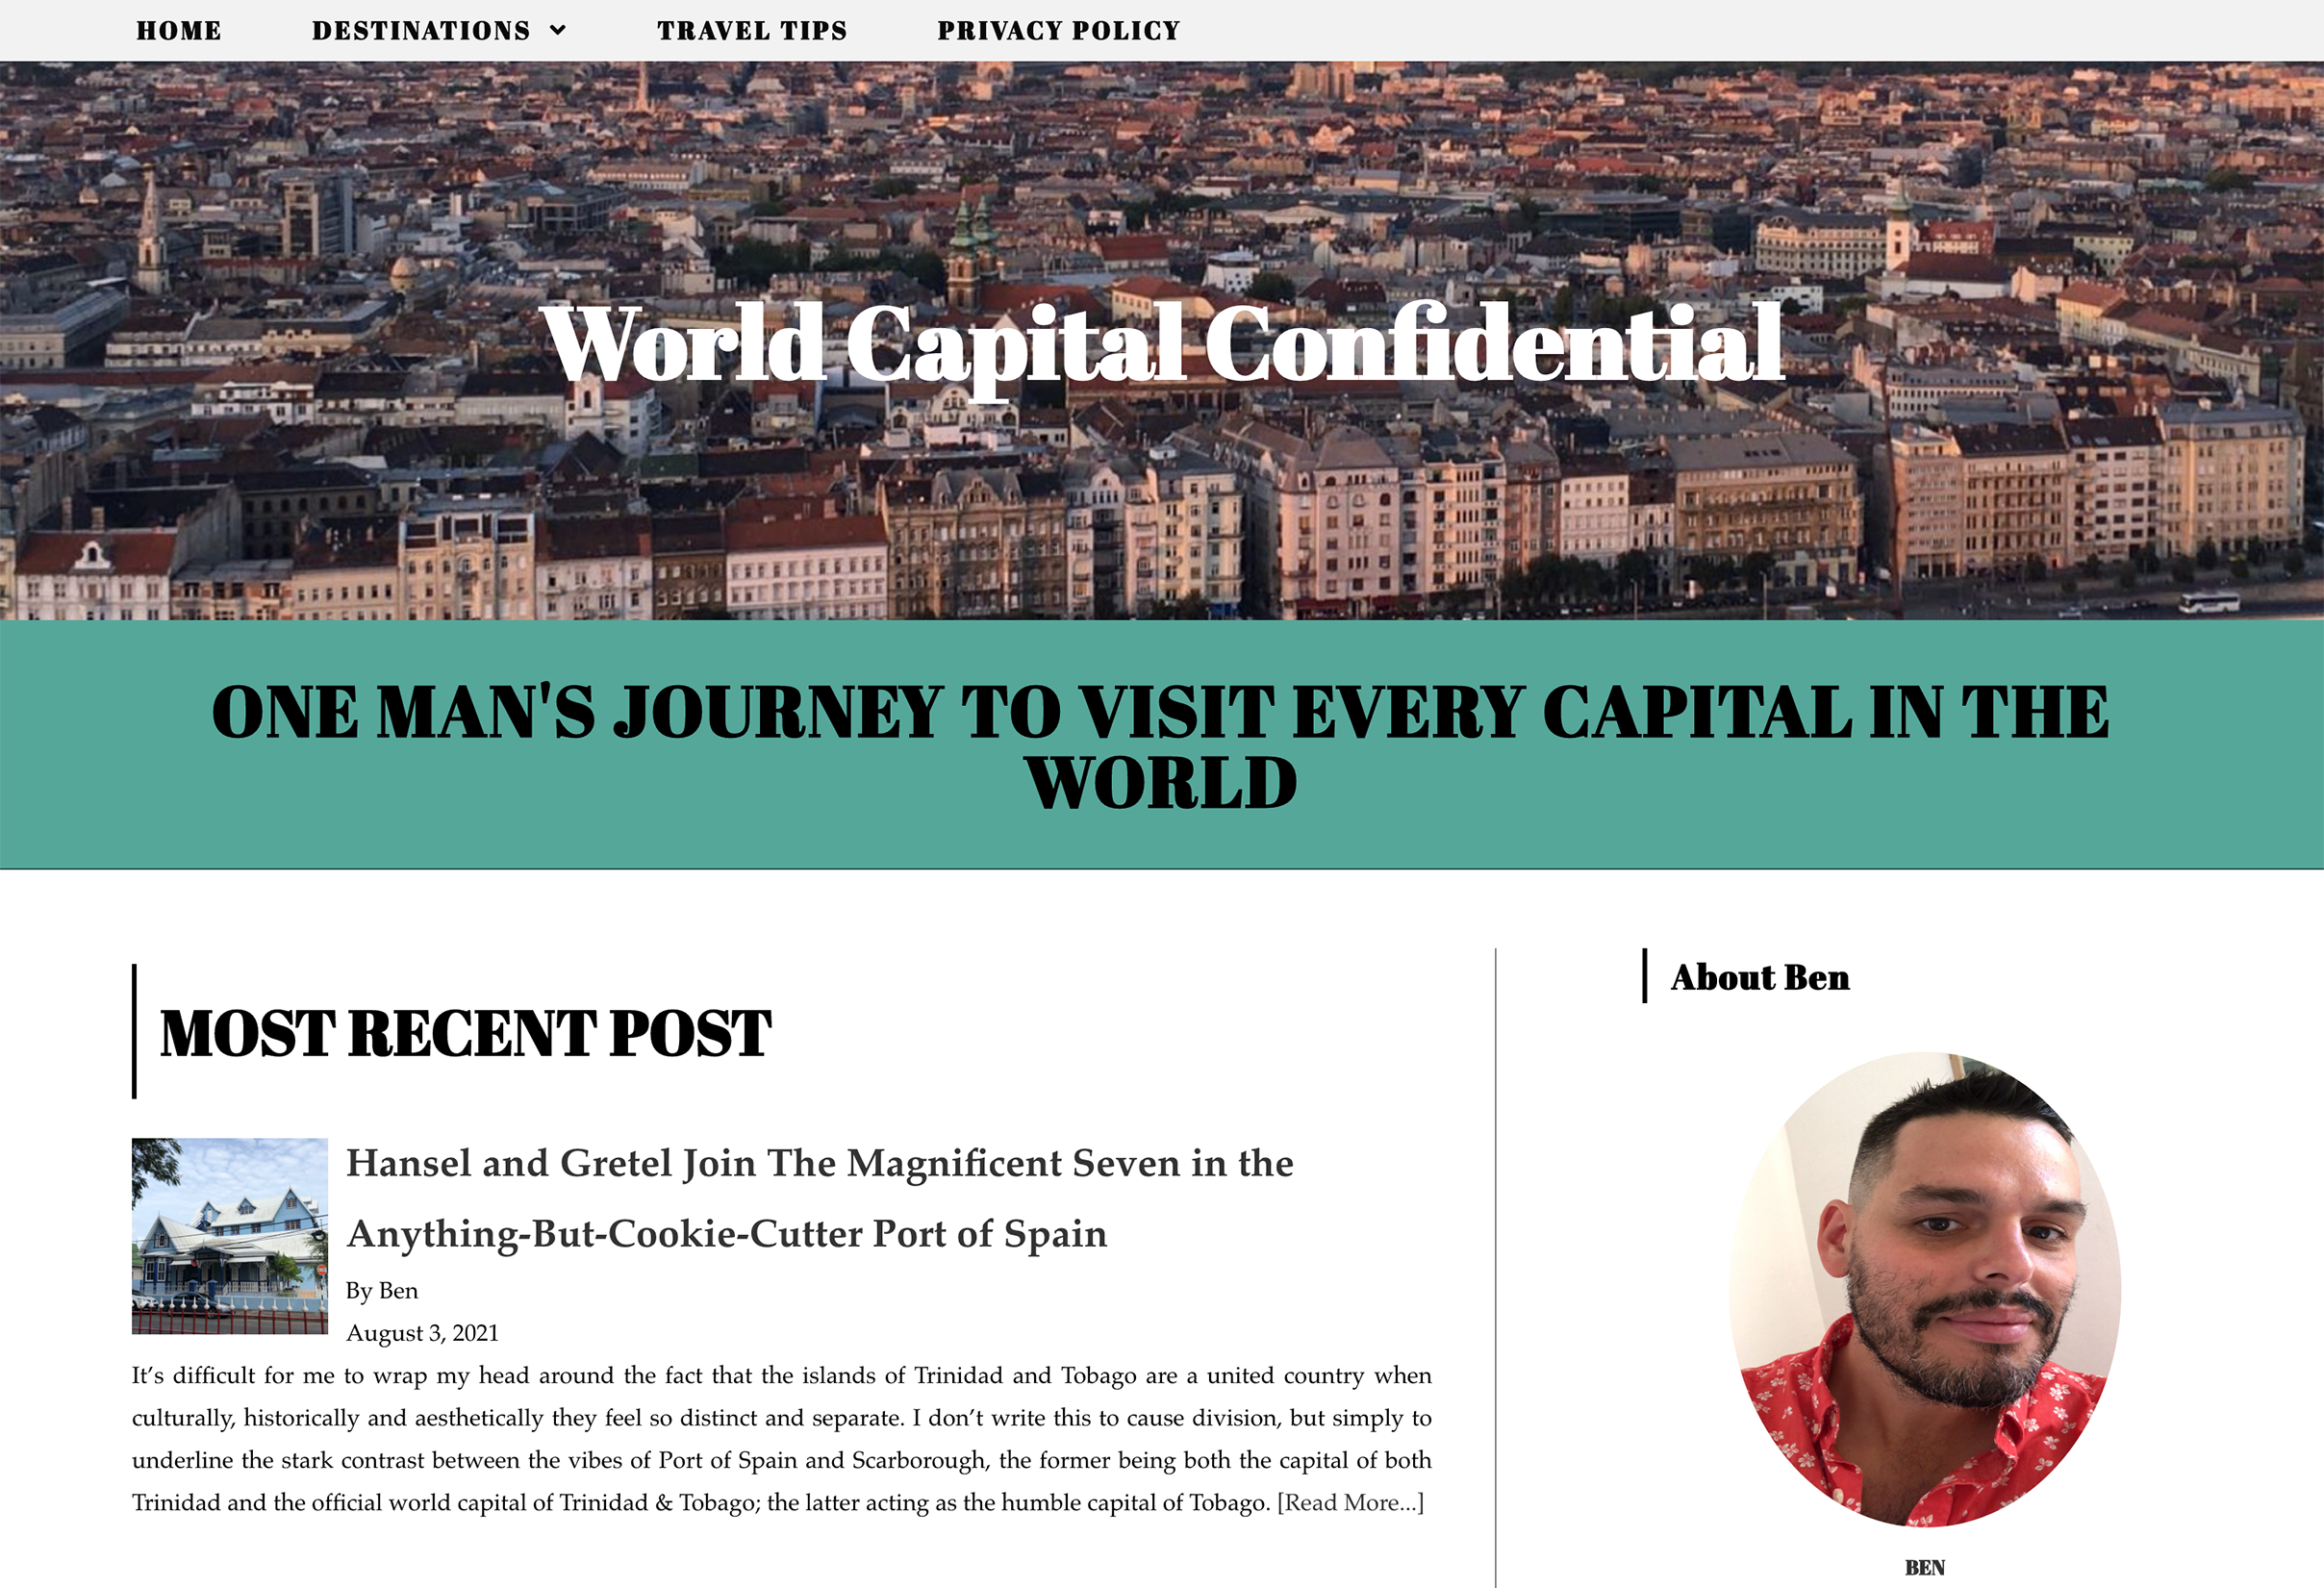 World Capital Confidential website